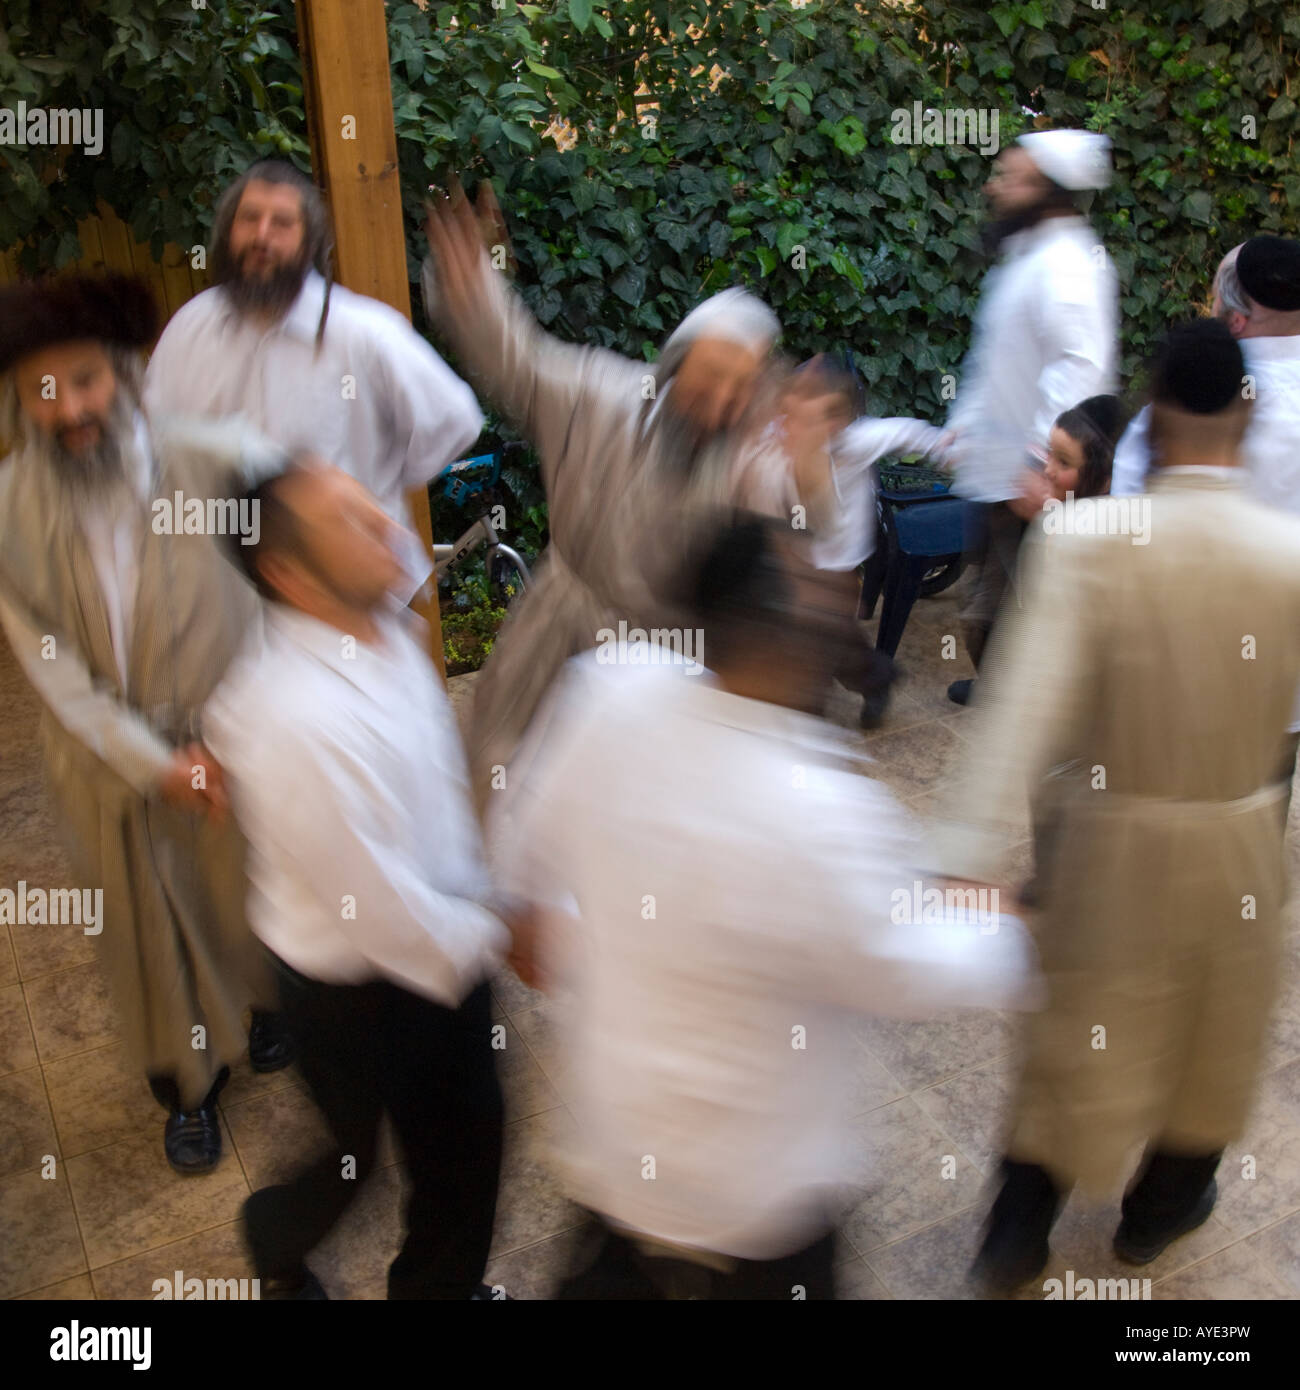 Israel Jerusalem Mea Shearim Orthodox neighbourhood group of men dancing together in a caroussel Stock Photo